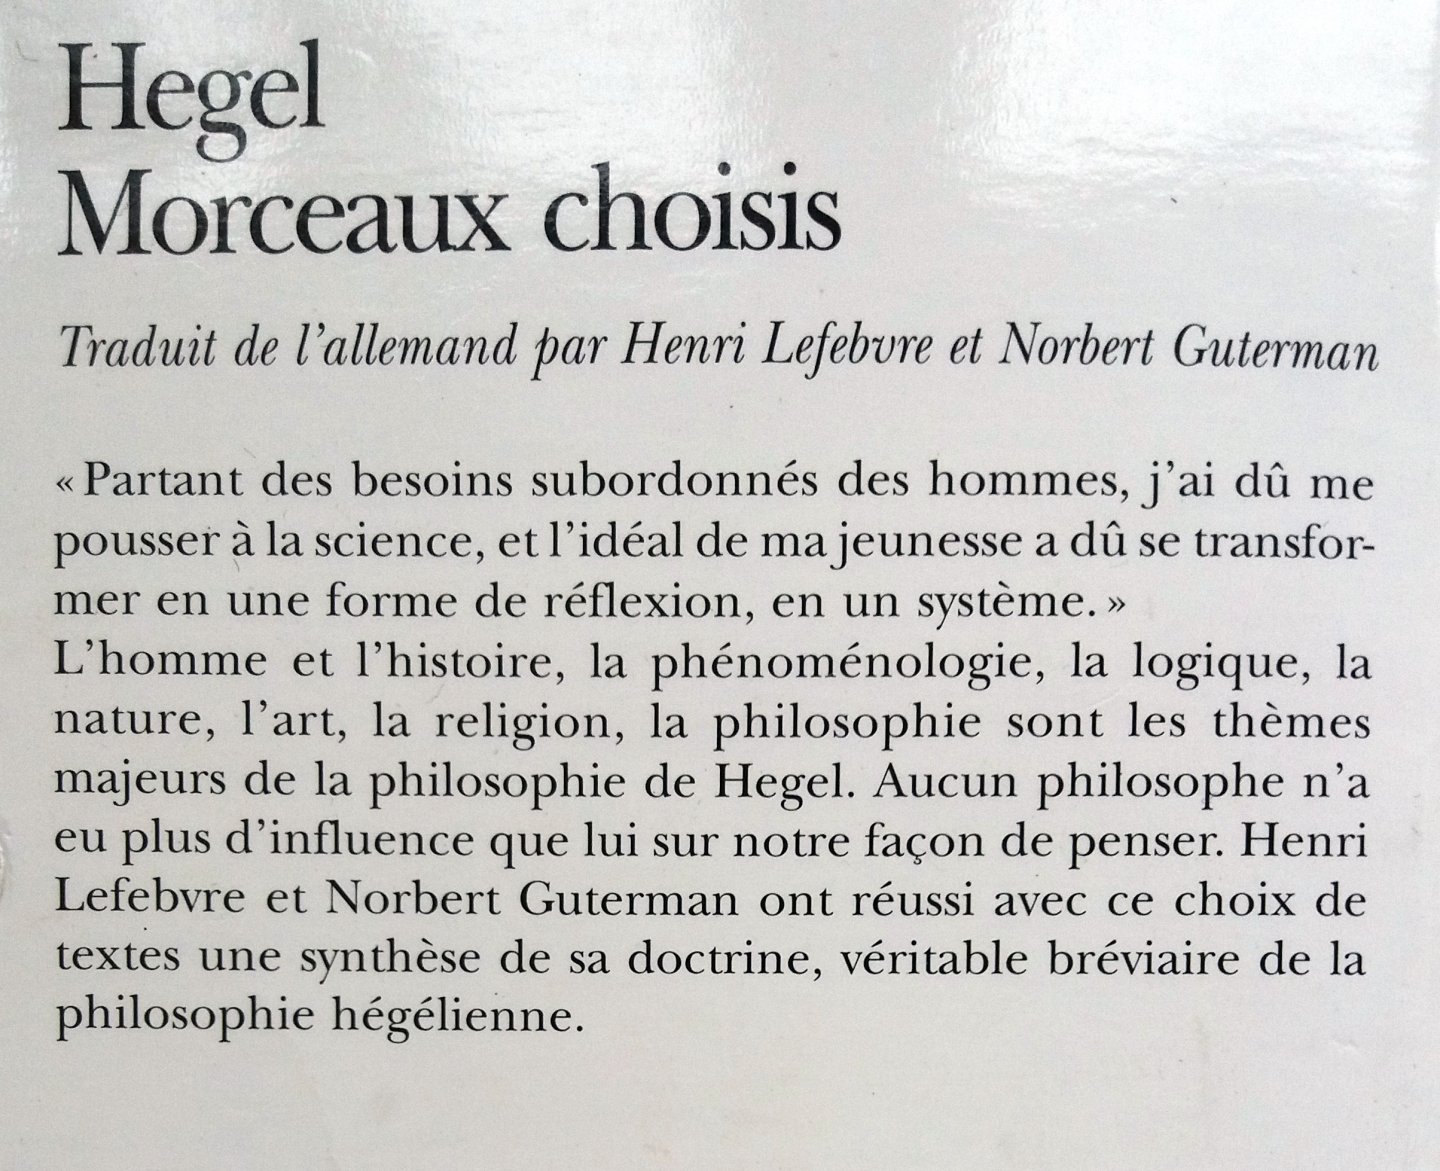 Hegel, G.W.F. - Morceaux choisis (FRANSTALIG)